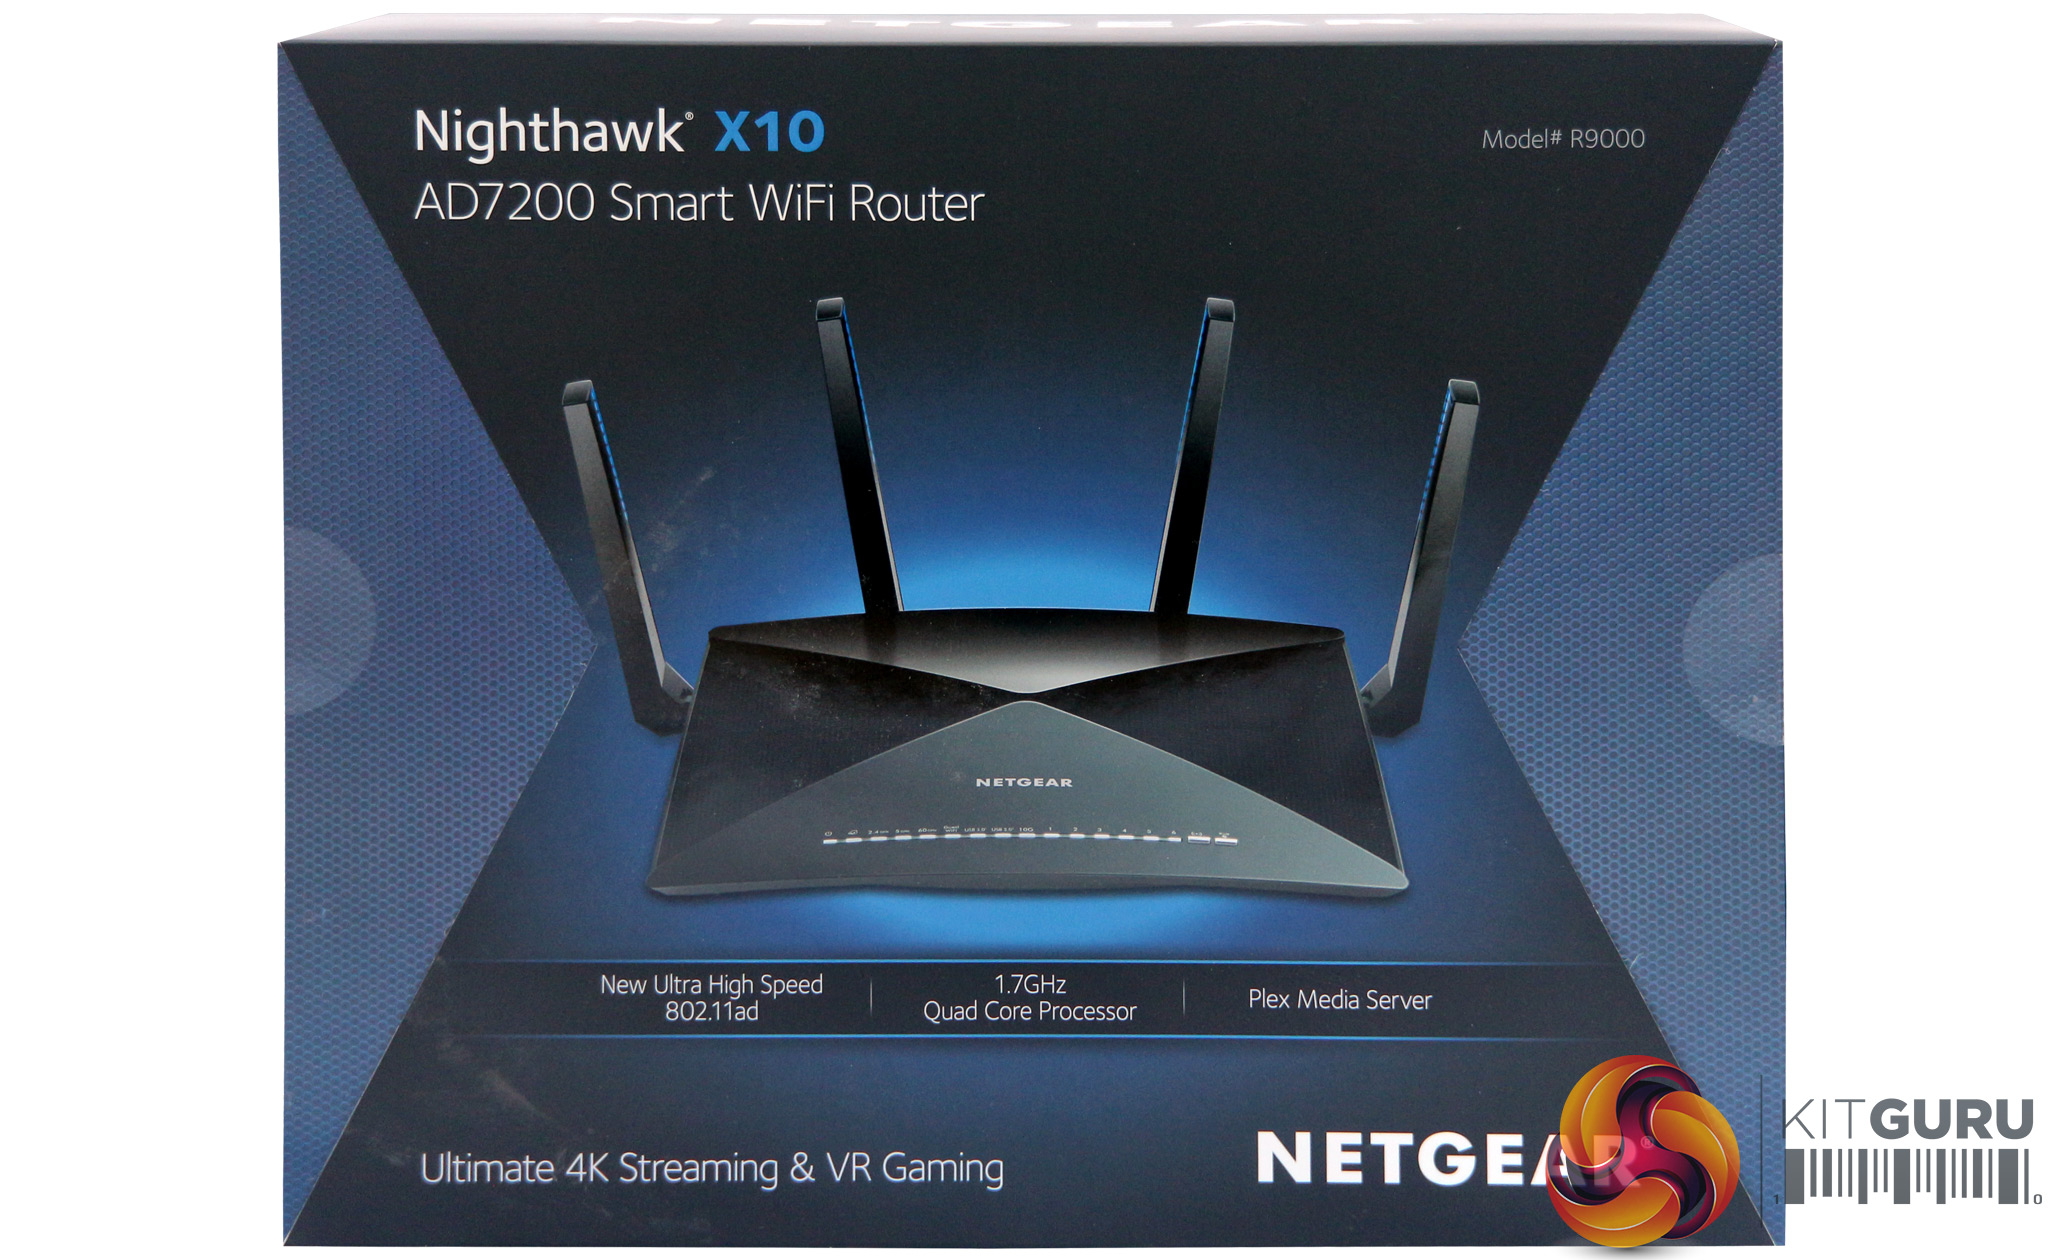 NETGEAR Nighthawk X10 R9000 AD7200 802.11ad Wireless Router